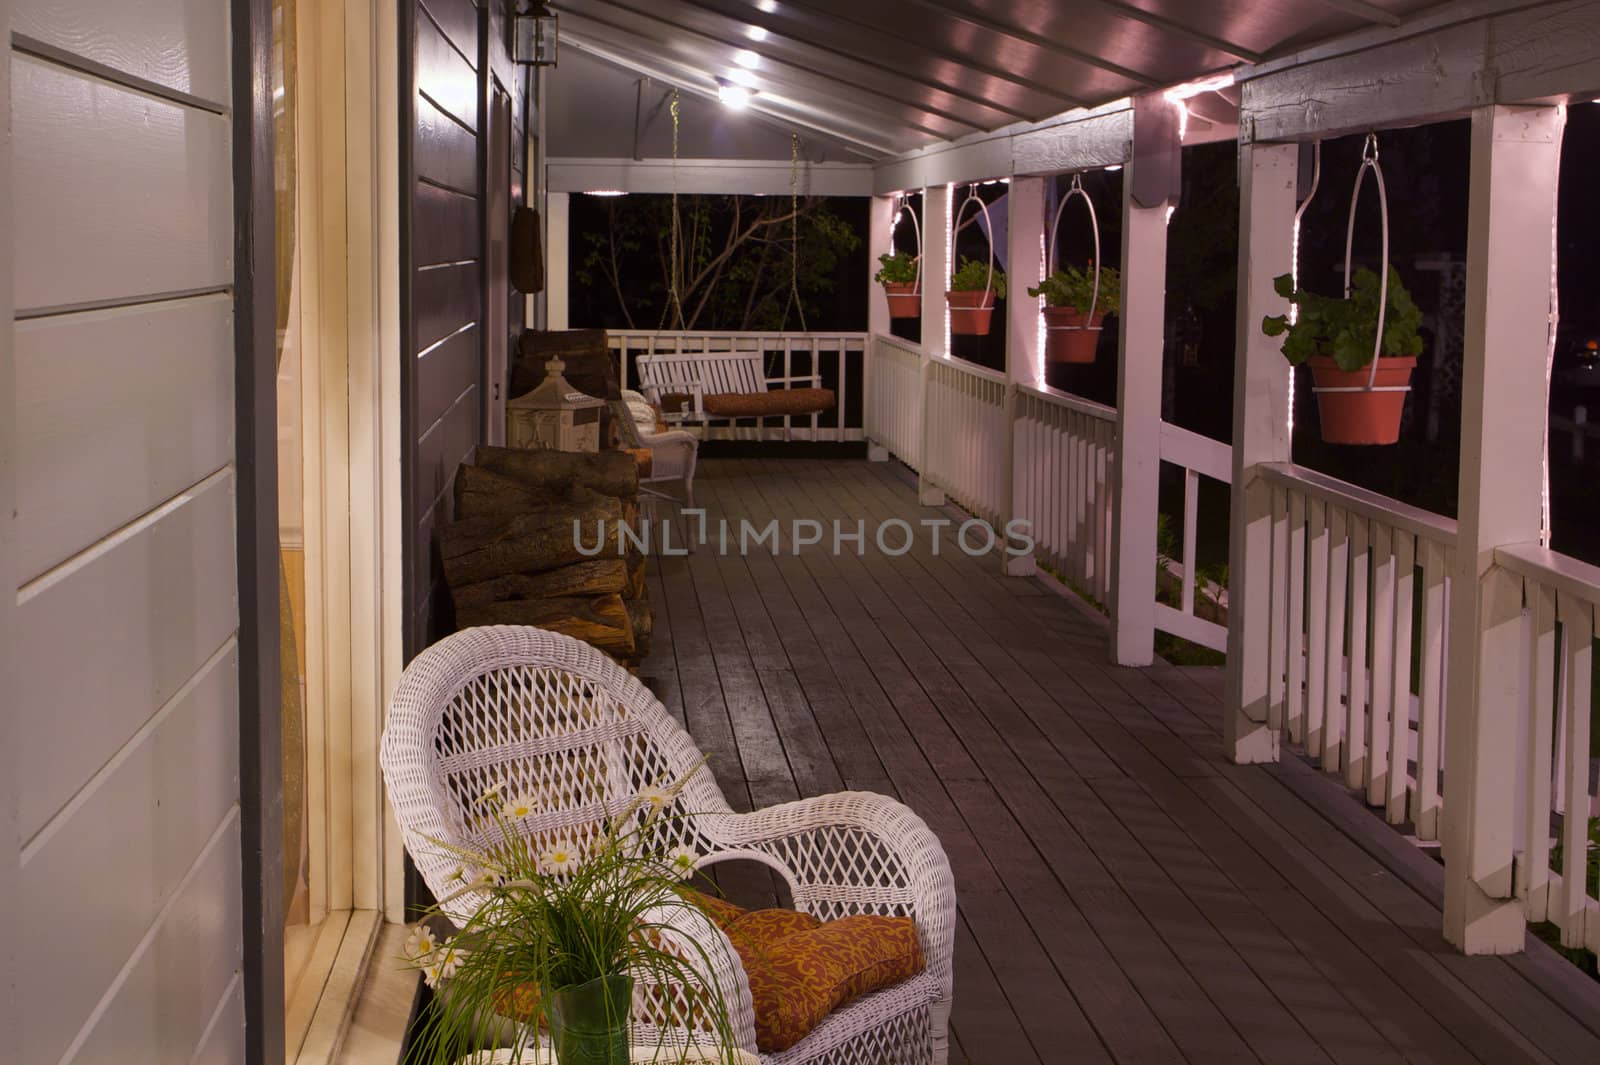 Country Front Porch at night horizontal by bobkeenan